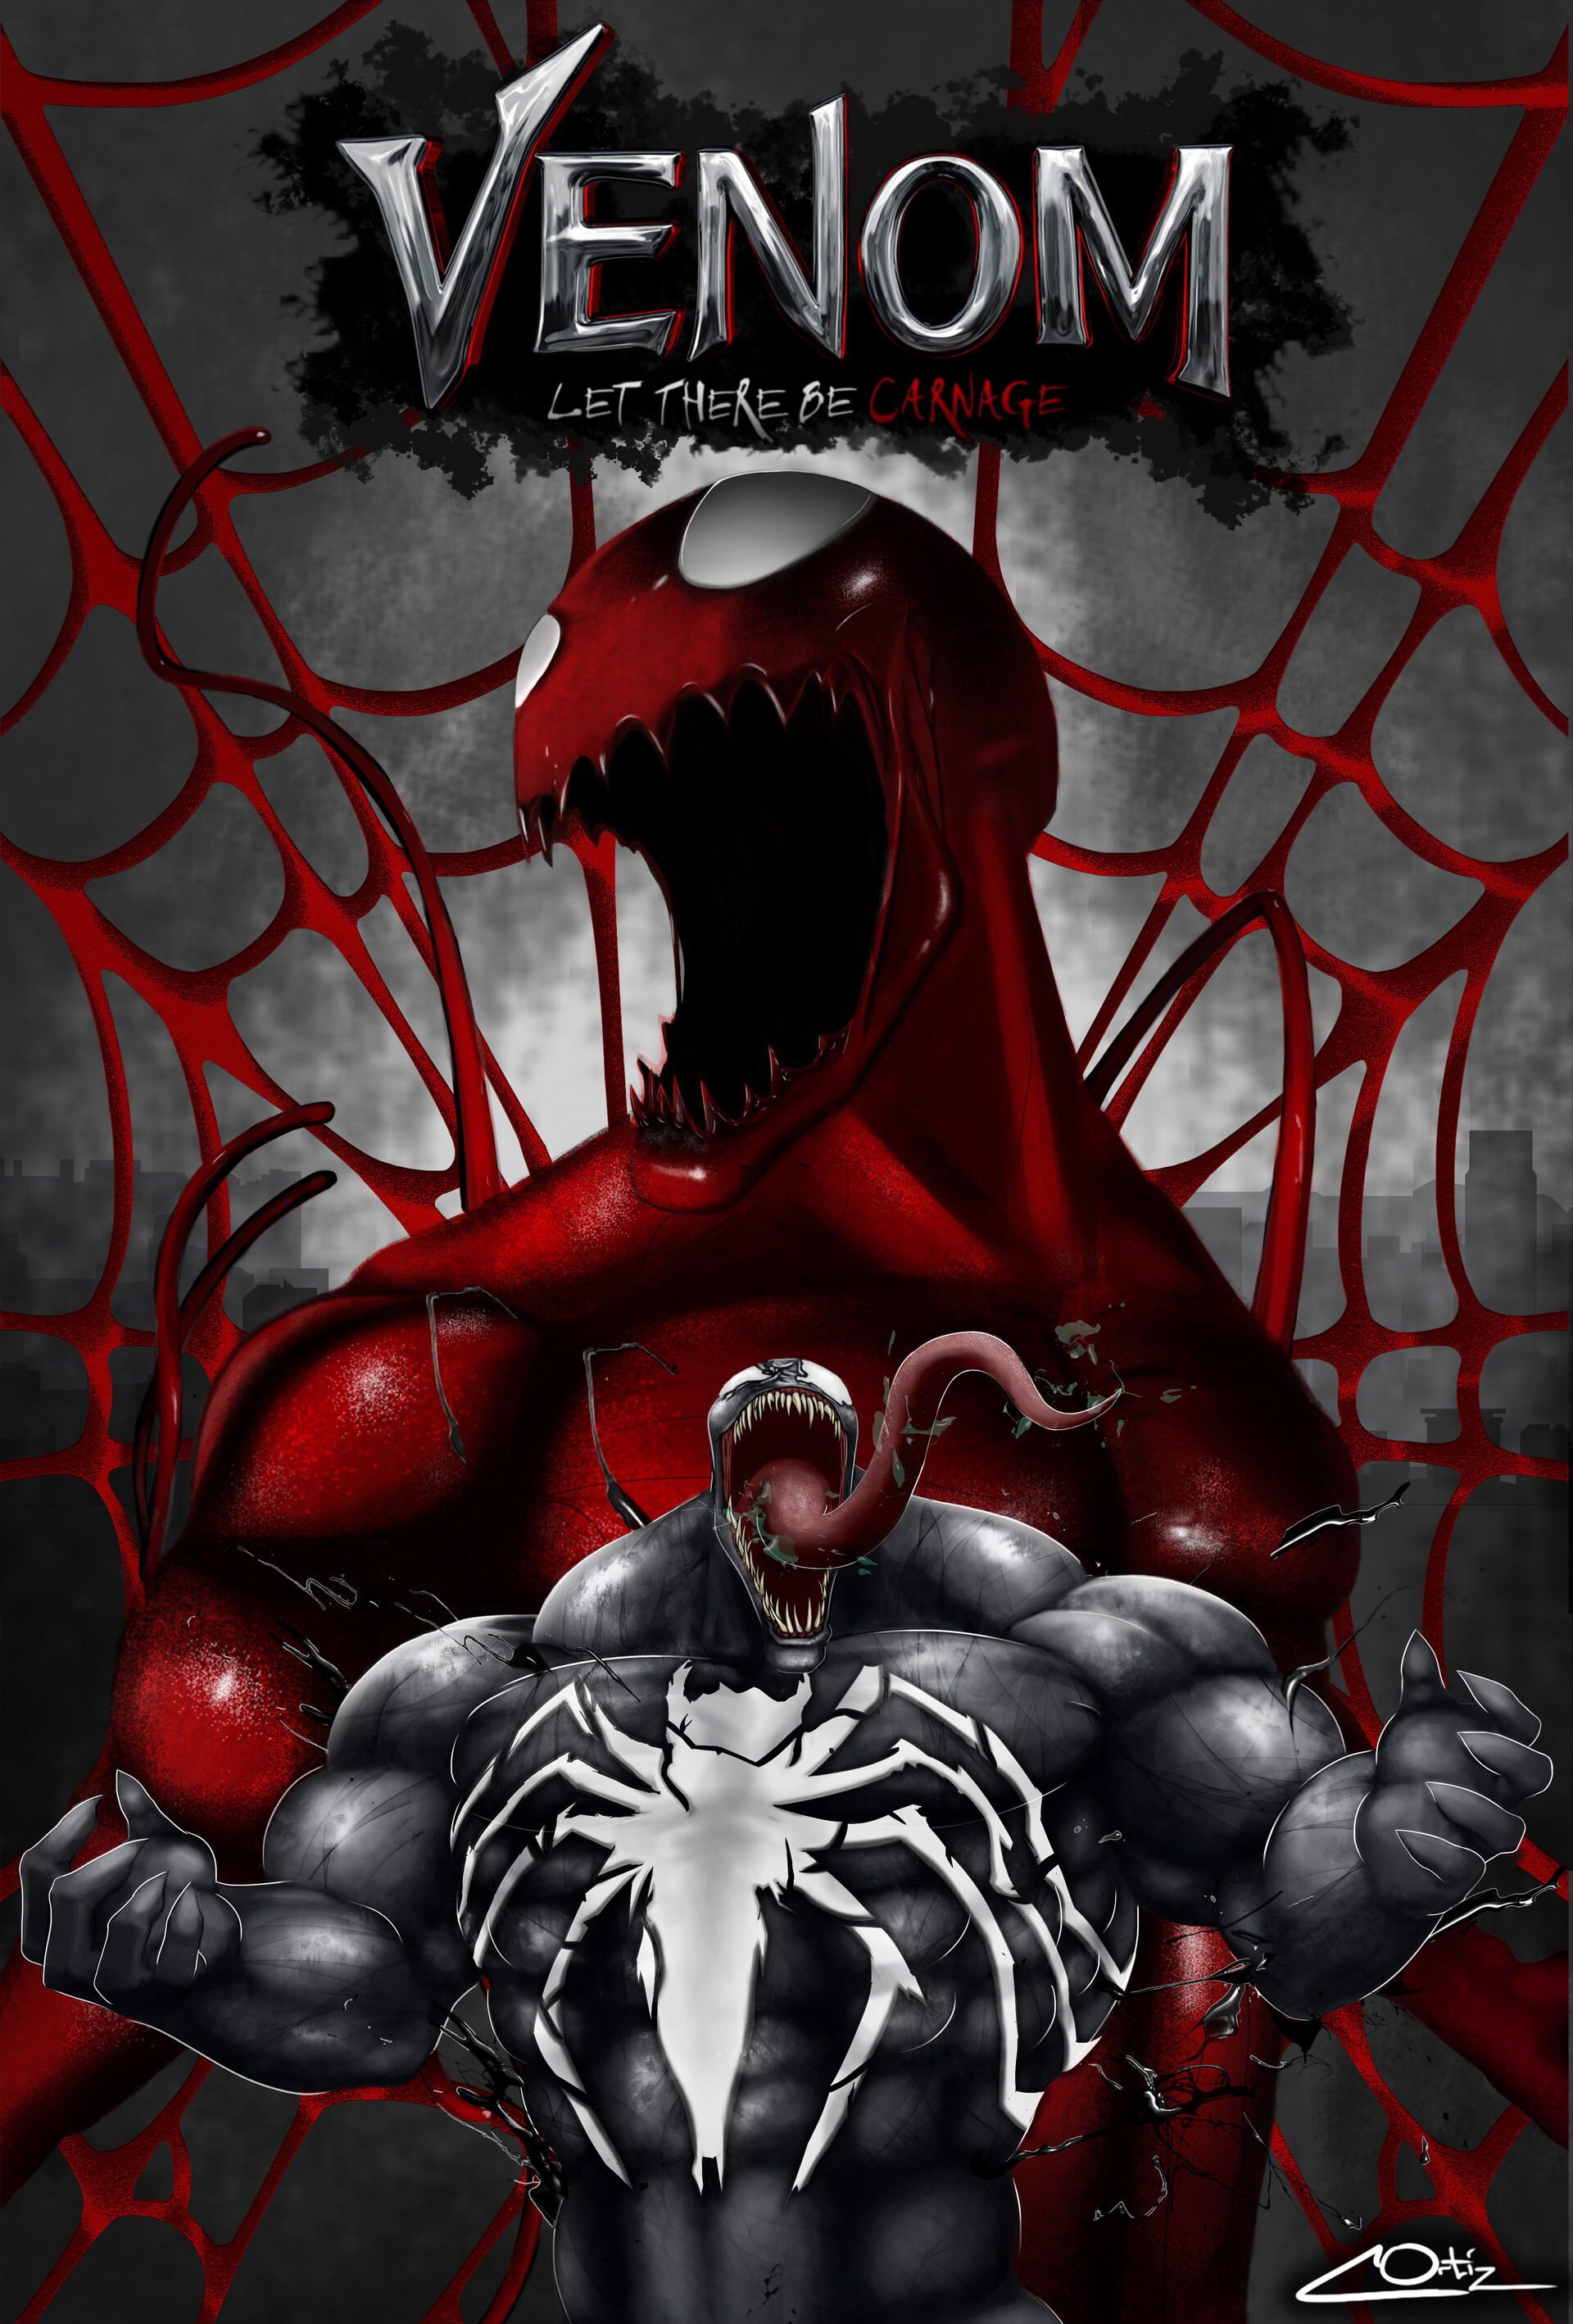 ArtStation - Venom: Let there be Carnage